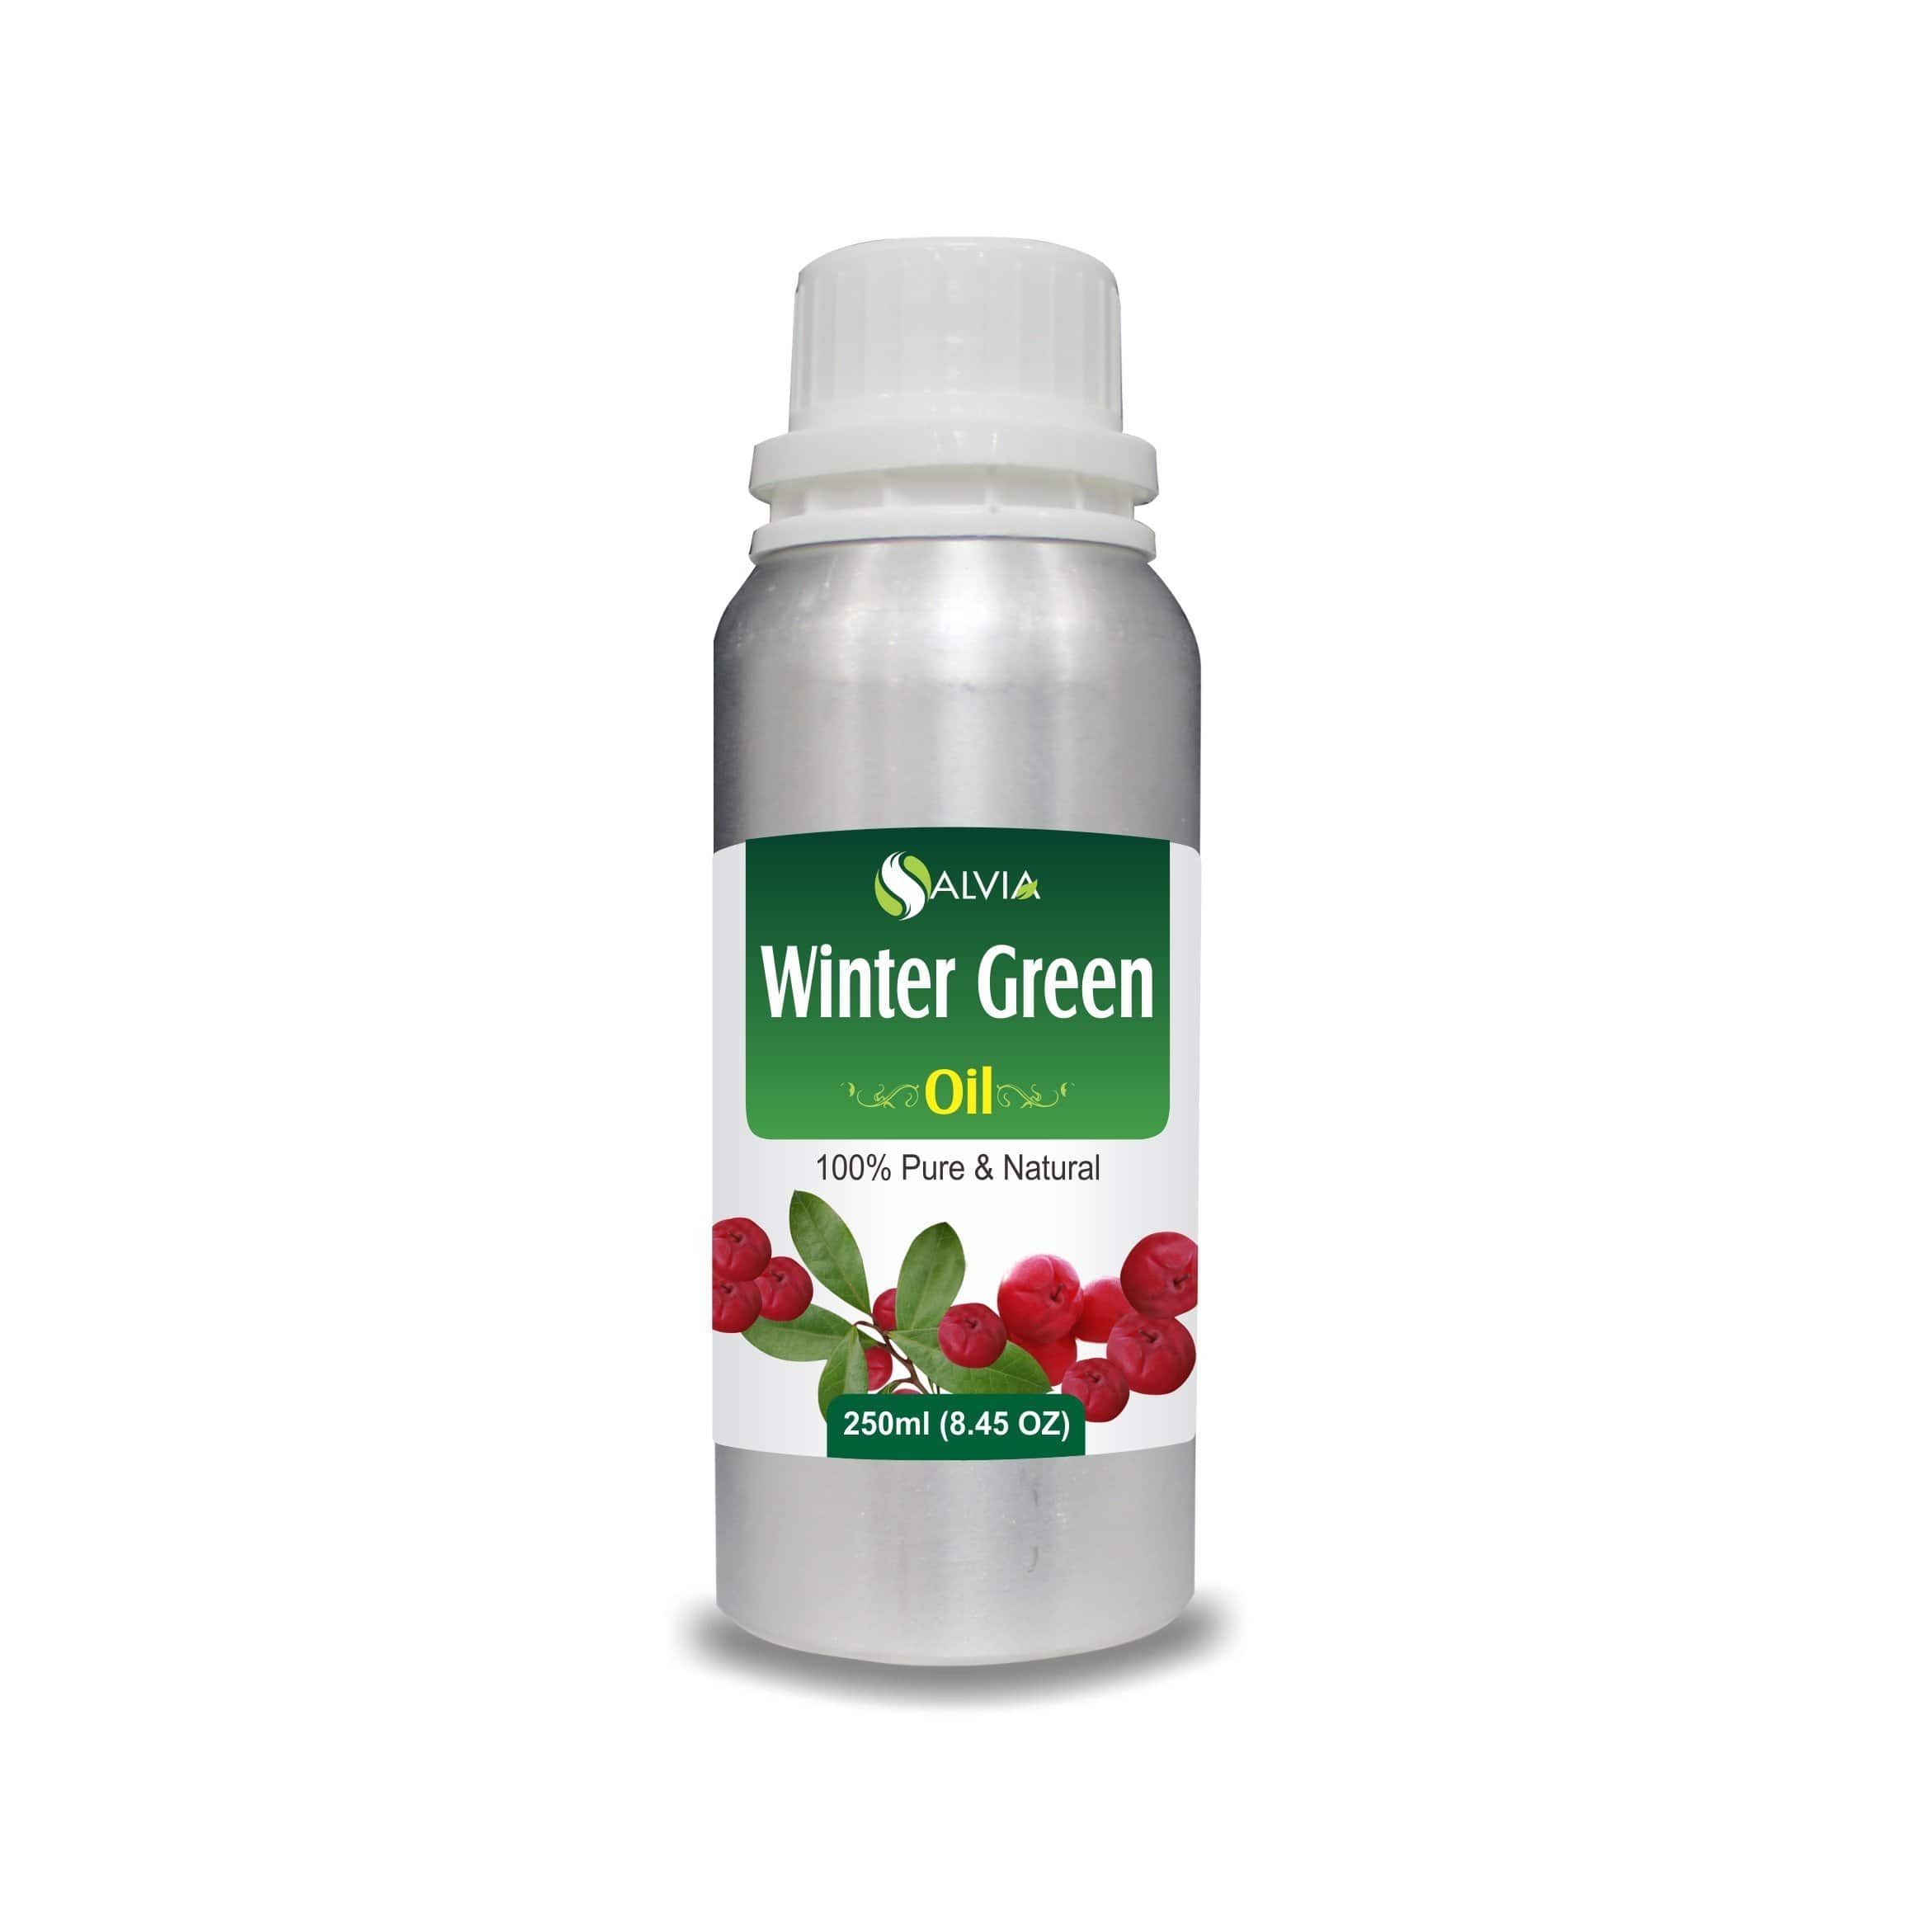 wintergreen oil benefits